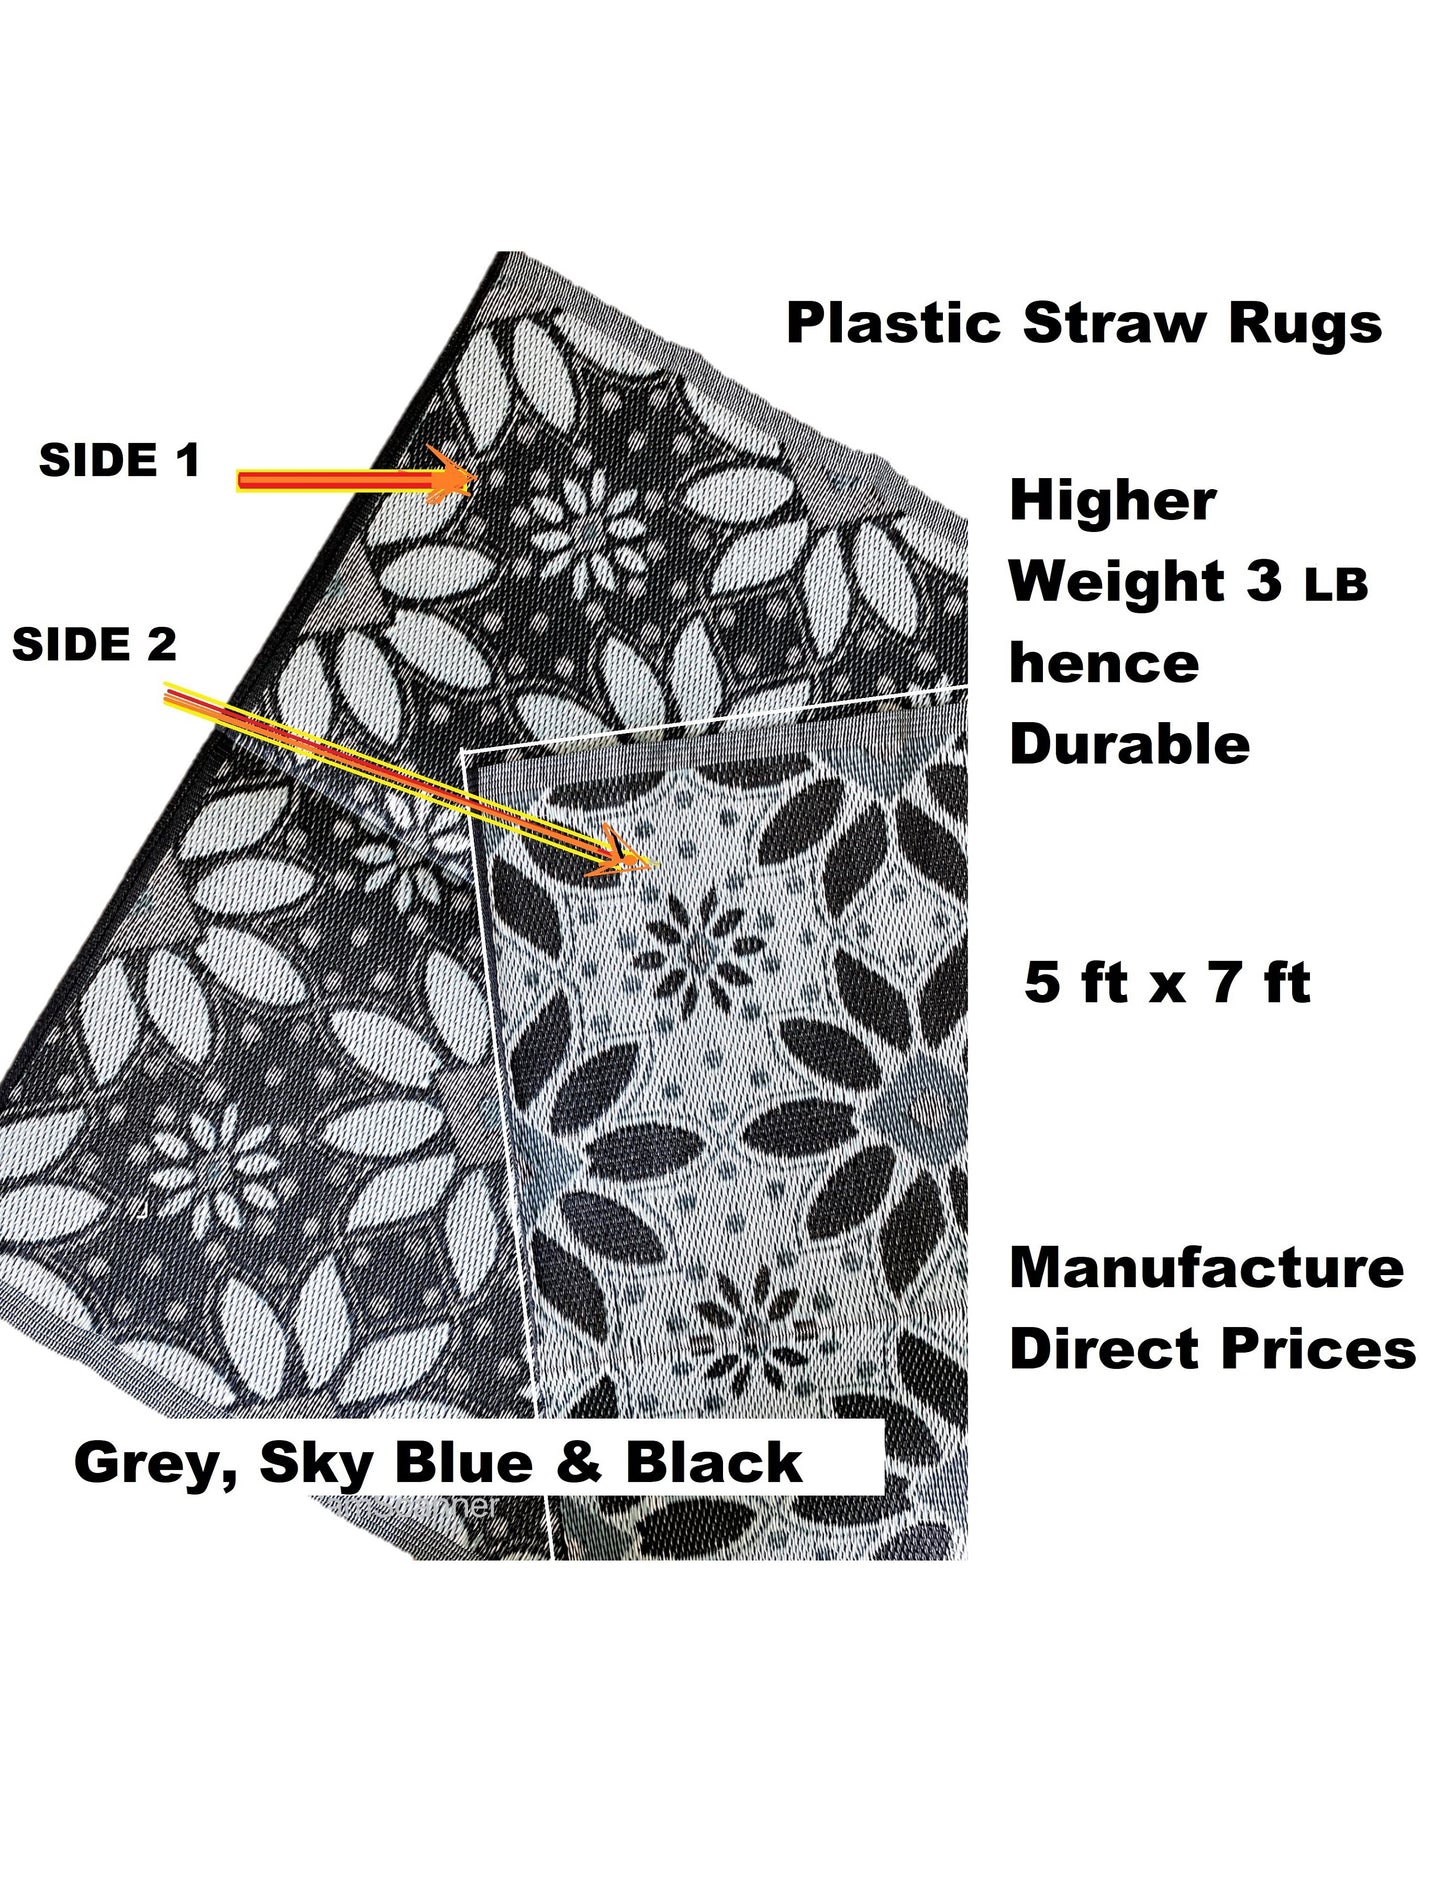 BalajeesUSA Outdoor Plastic Straw Patio Rugs - 5'x7' Sky Blue, Grey